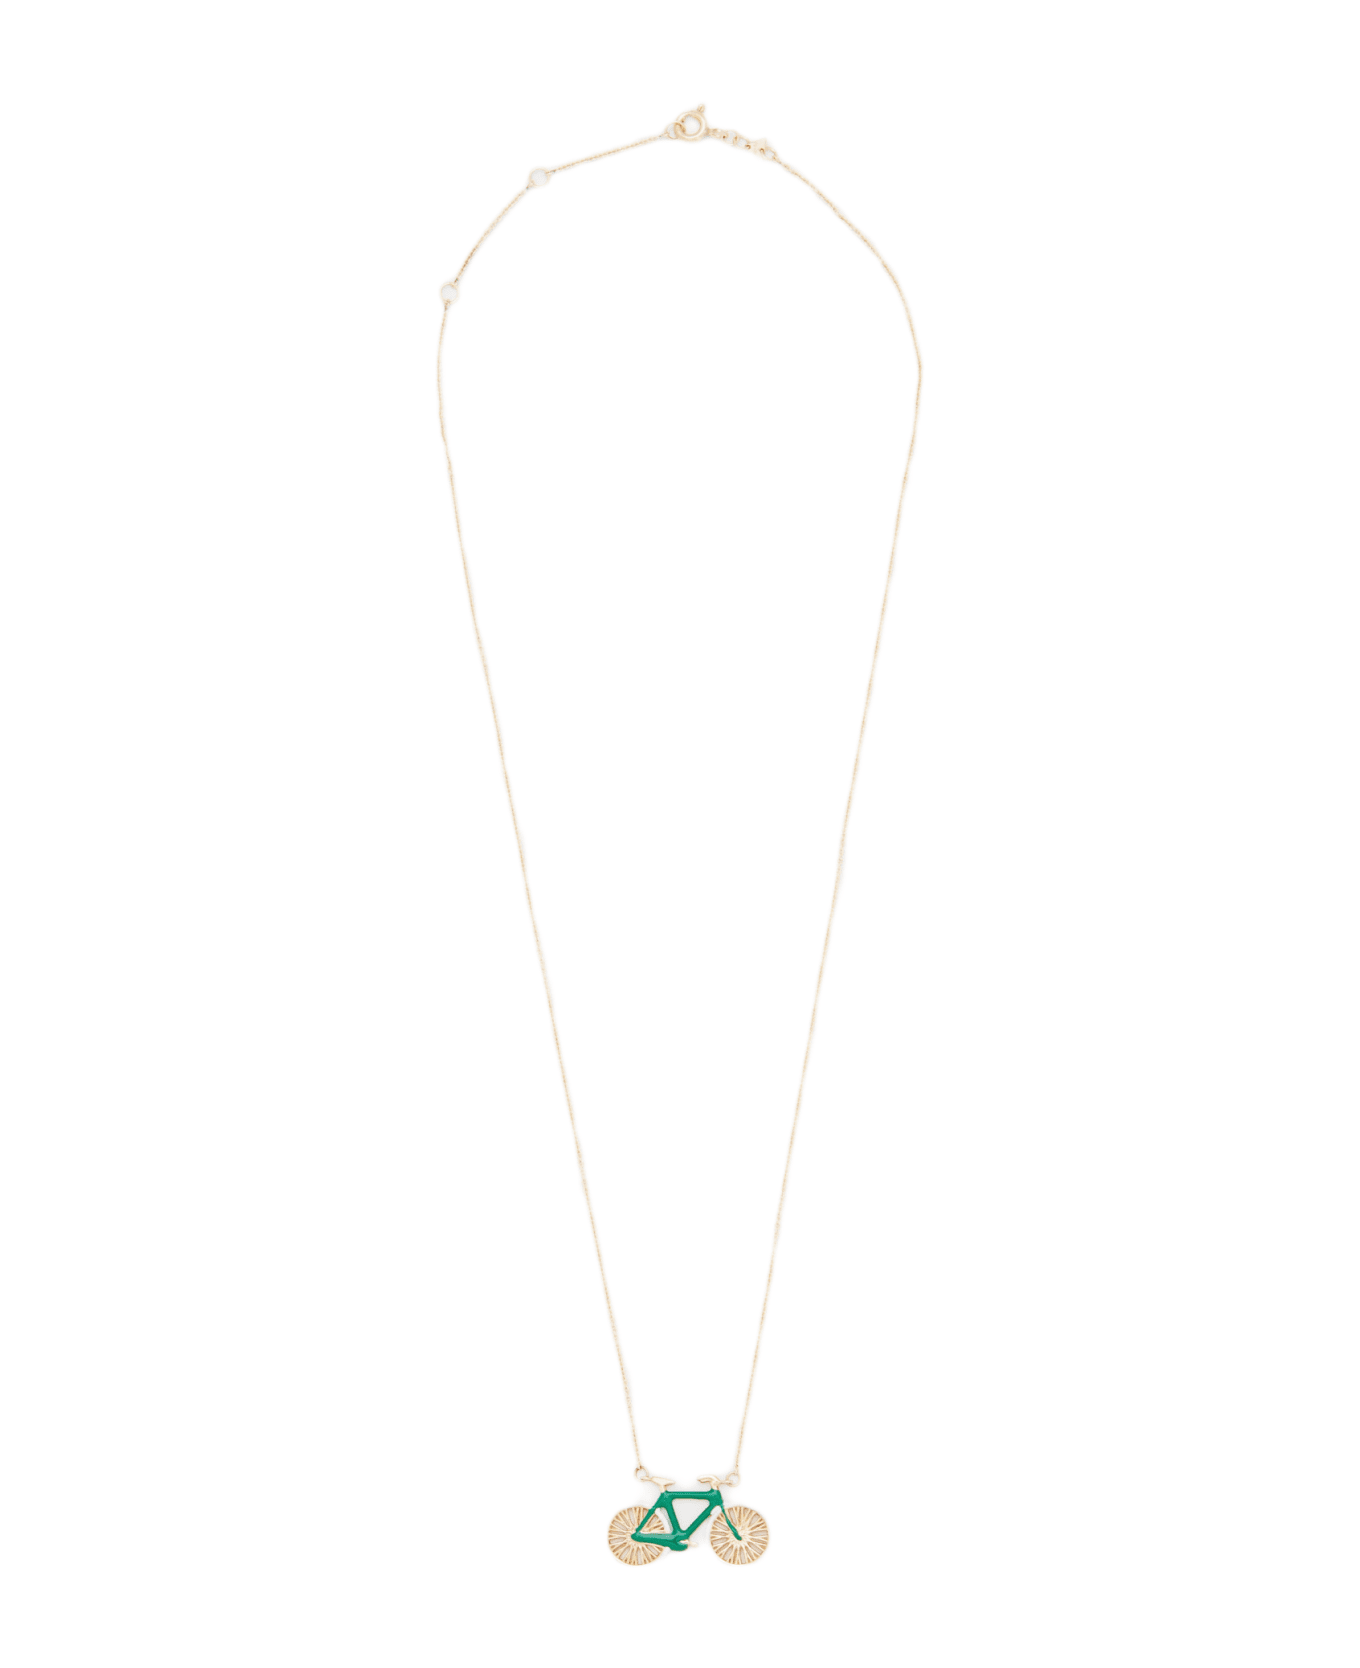 Aliita 9k Gold Bici Polished Necklace - Pistacchio Green+white/